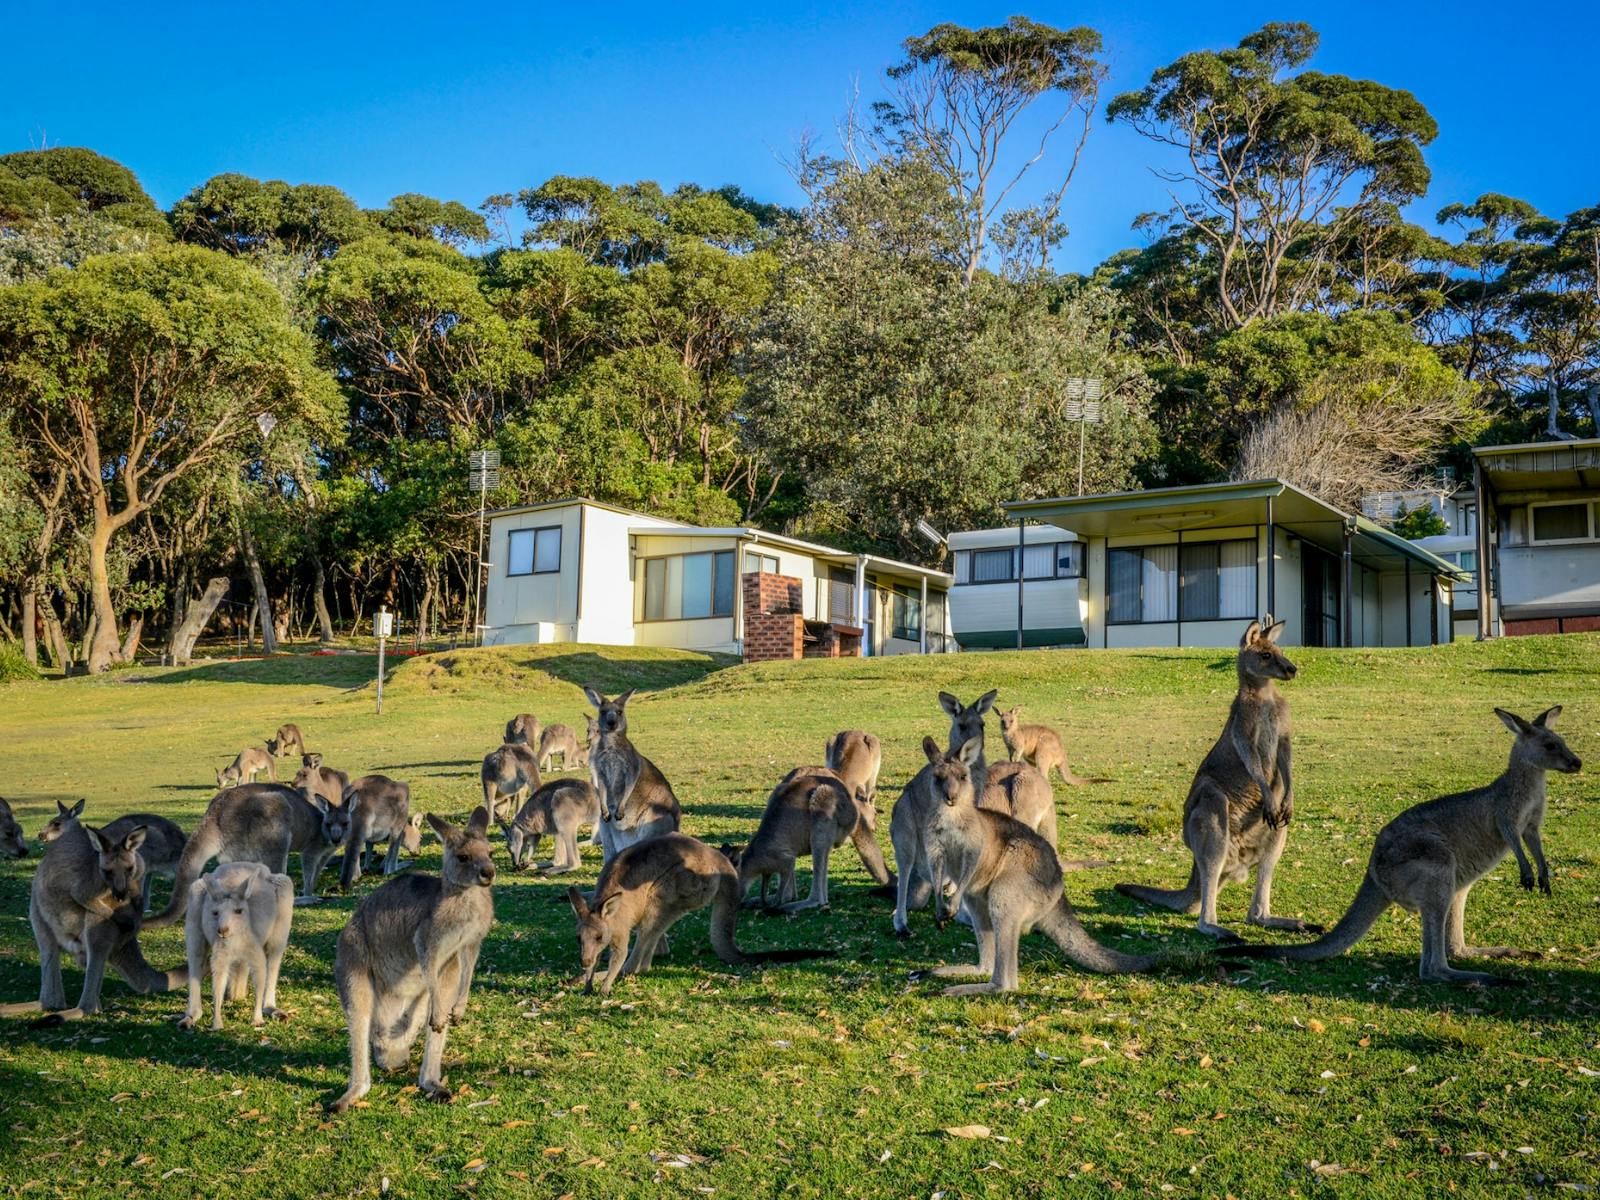 Kangaroos at Merry Beach Caravan Park.